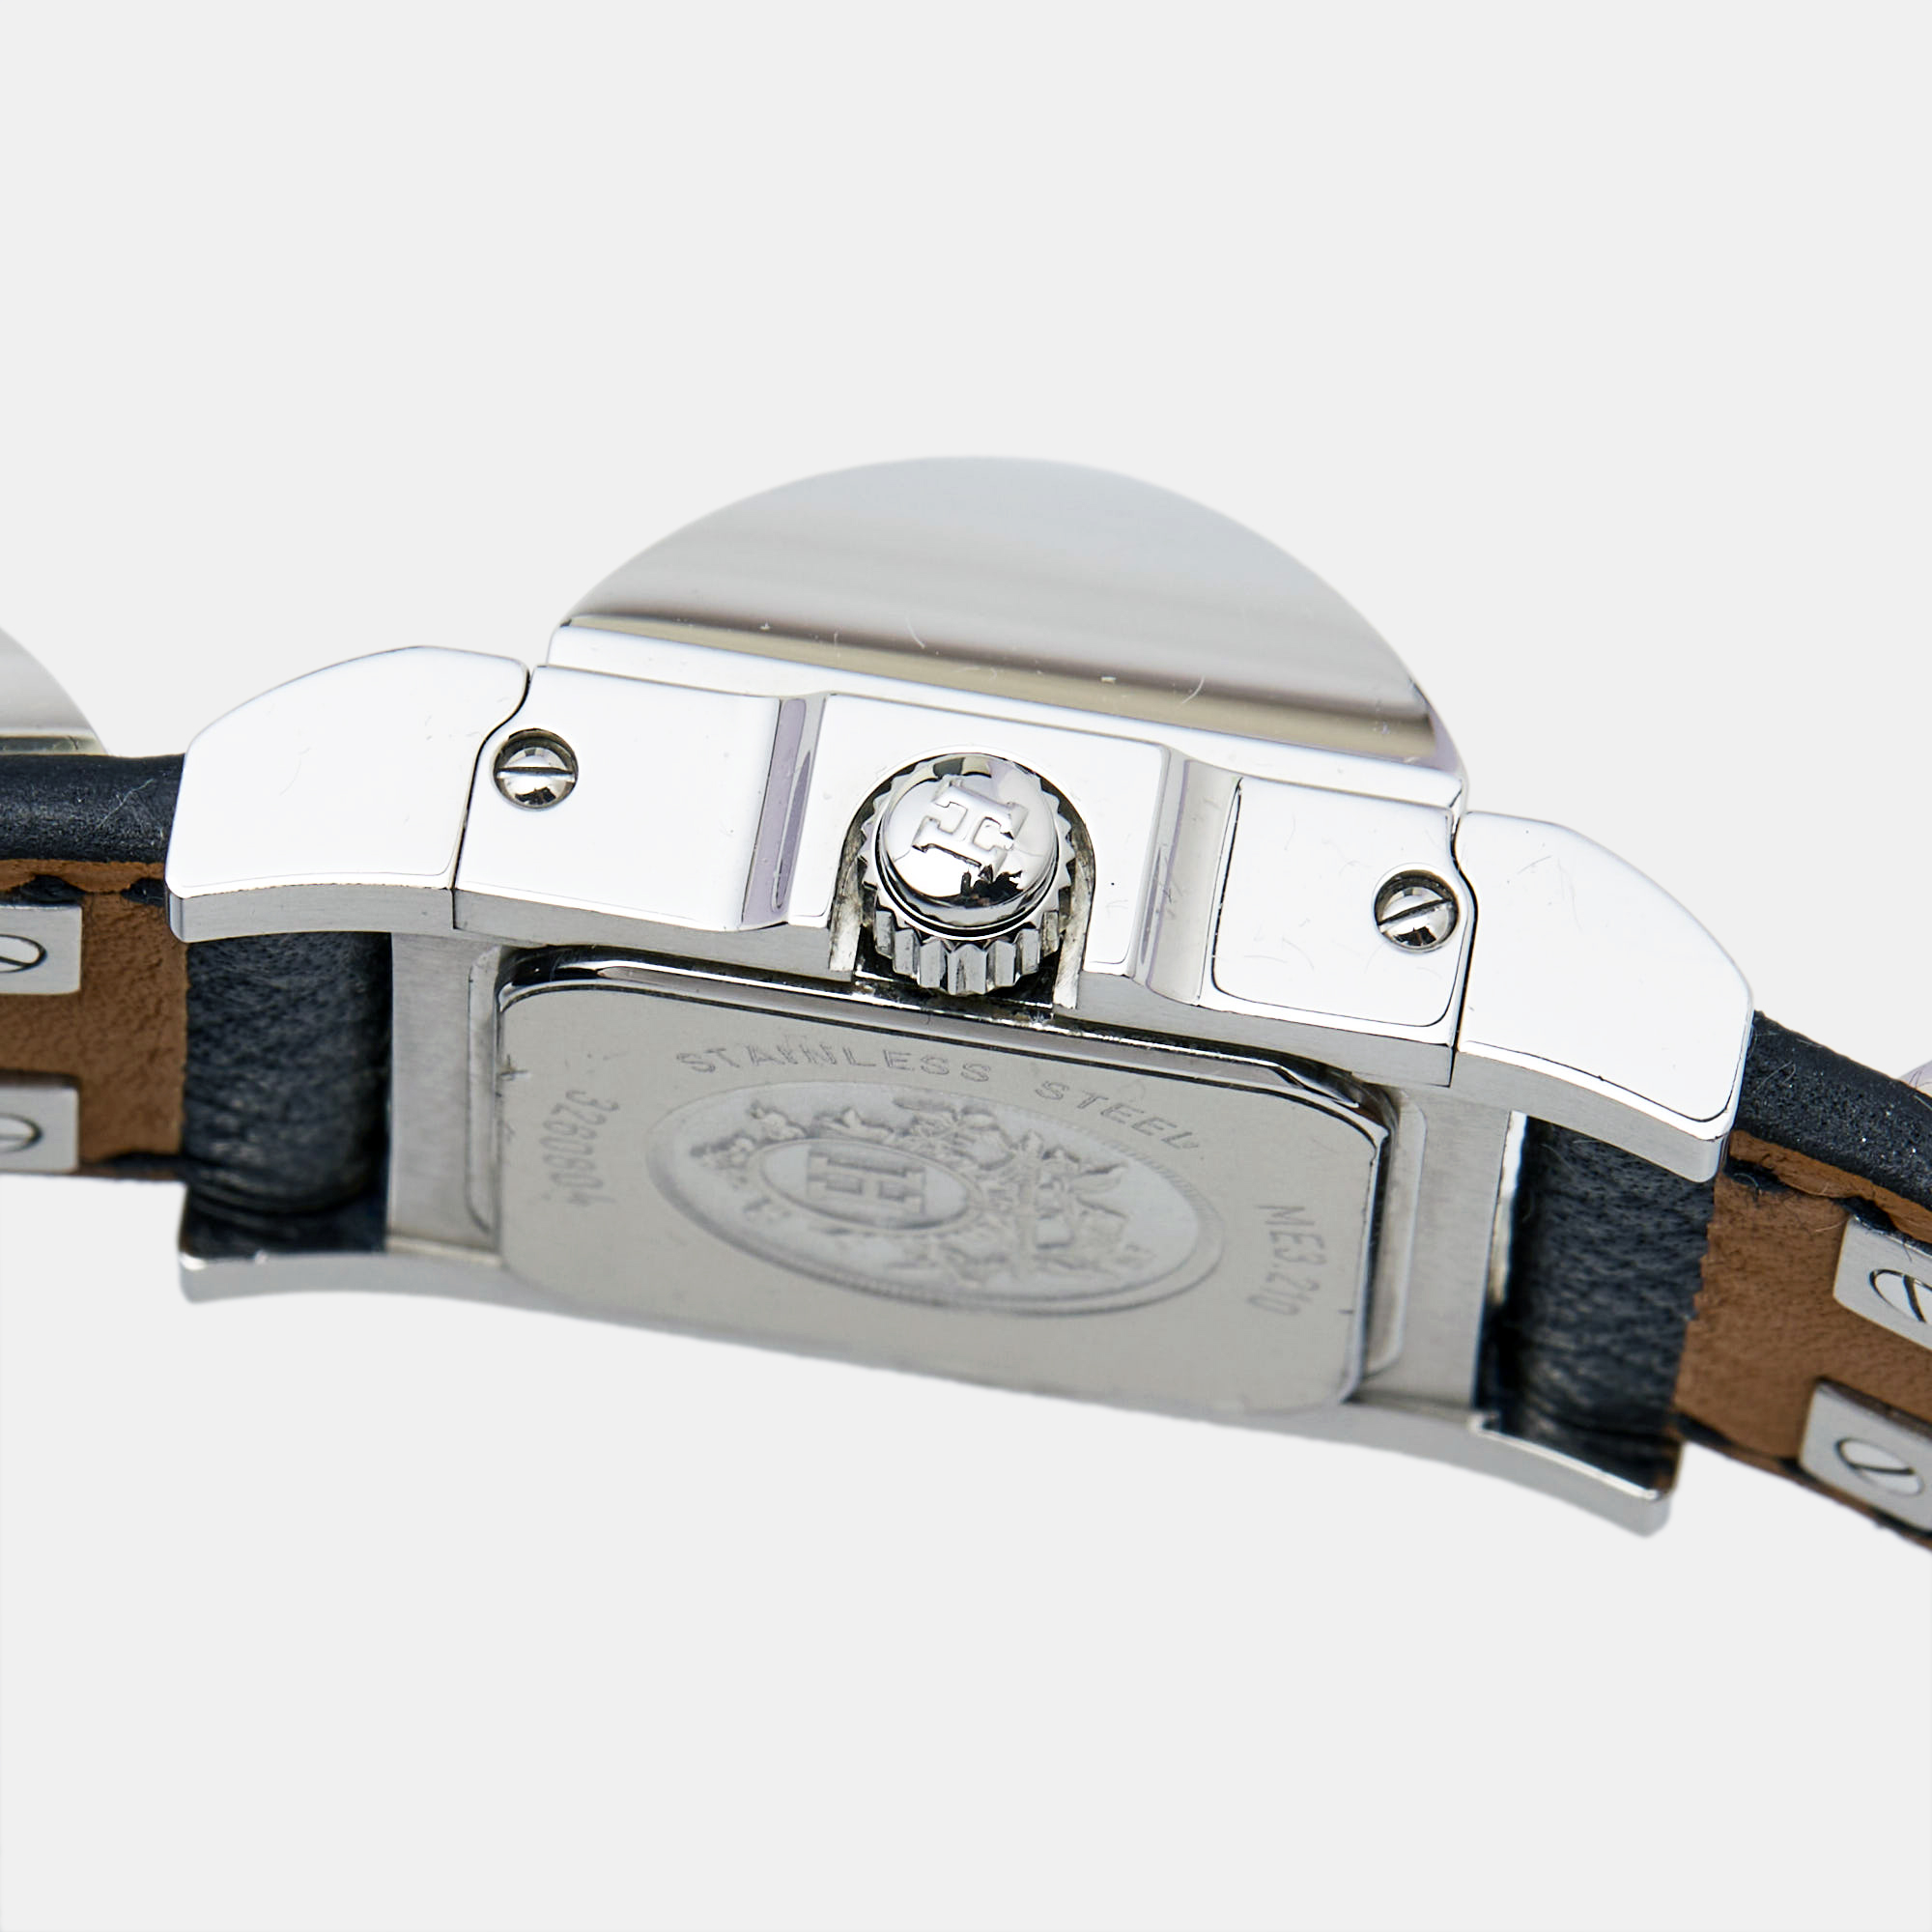 Hermes Silver Stainless Steel Leather Medor W028322WW00 Women's Wristwatch 23 Mm